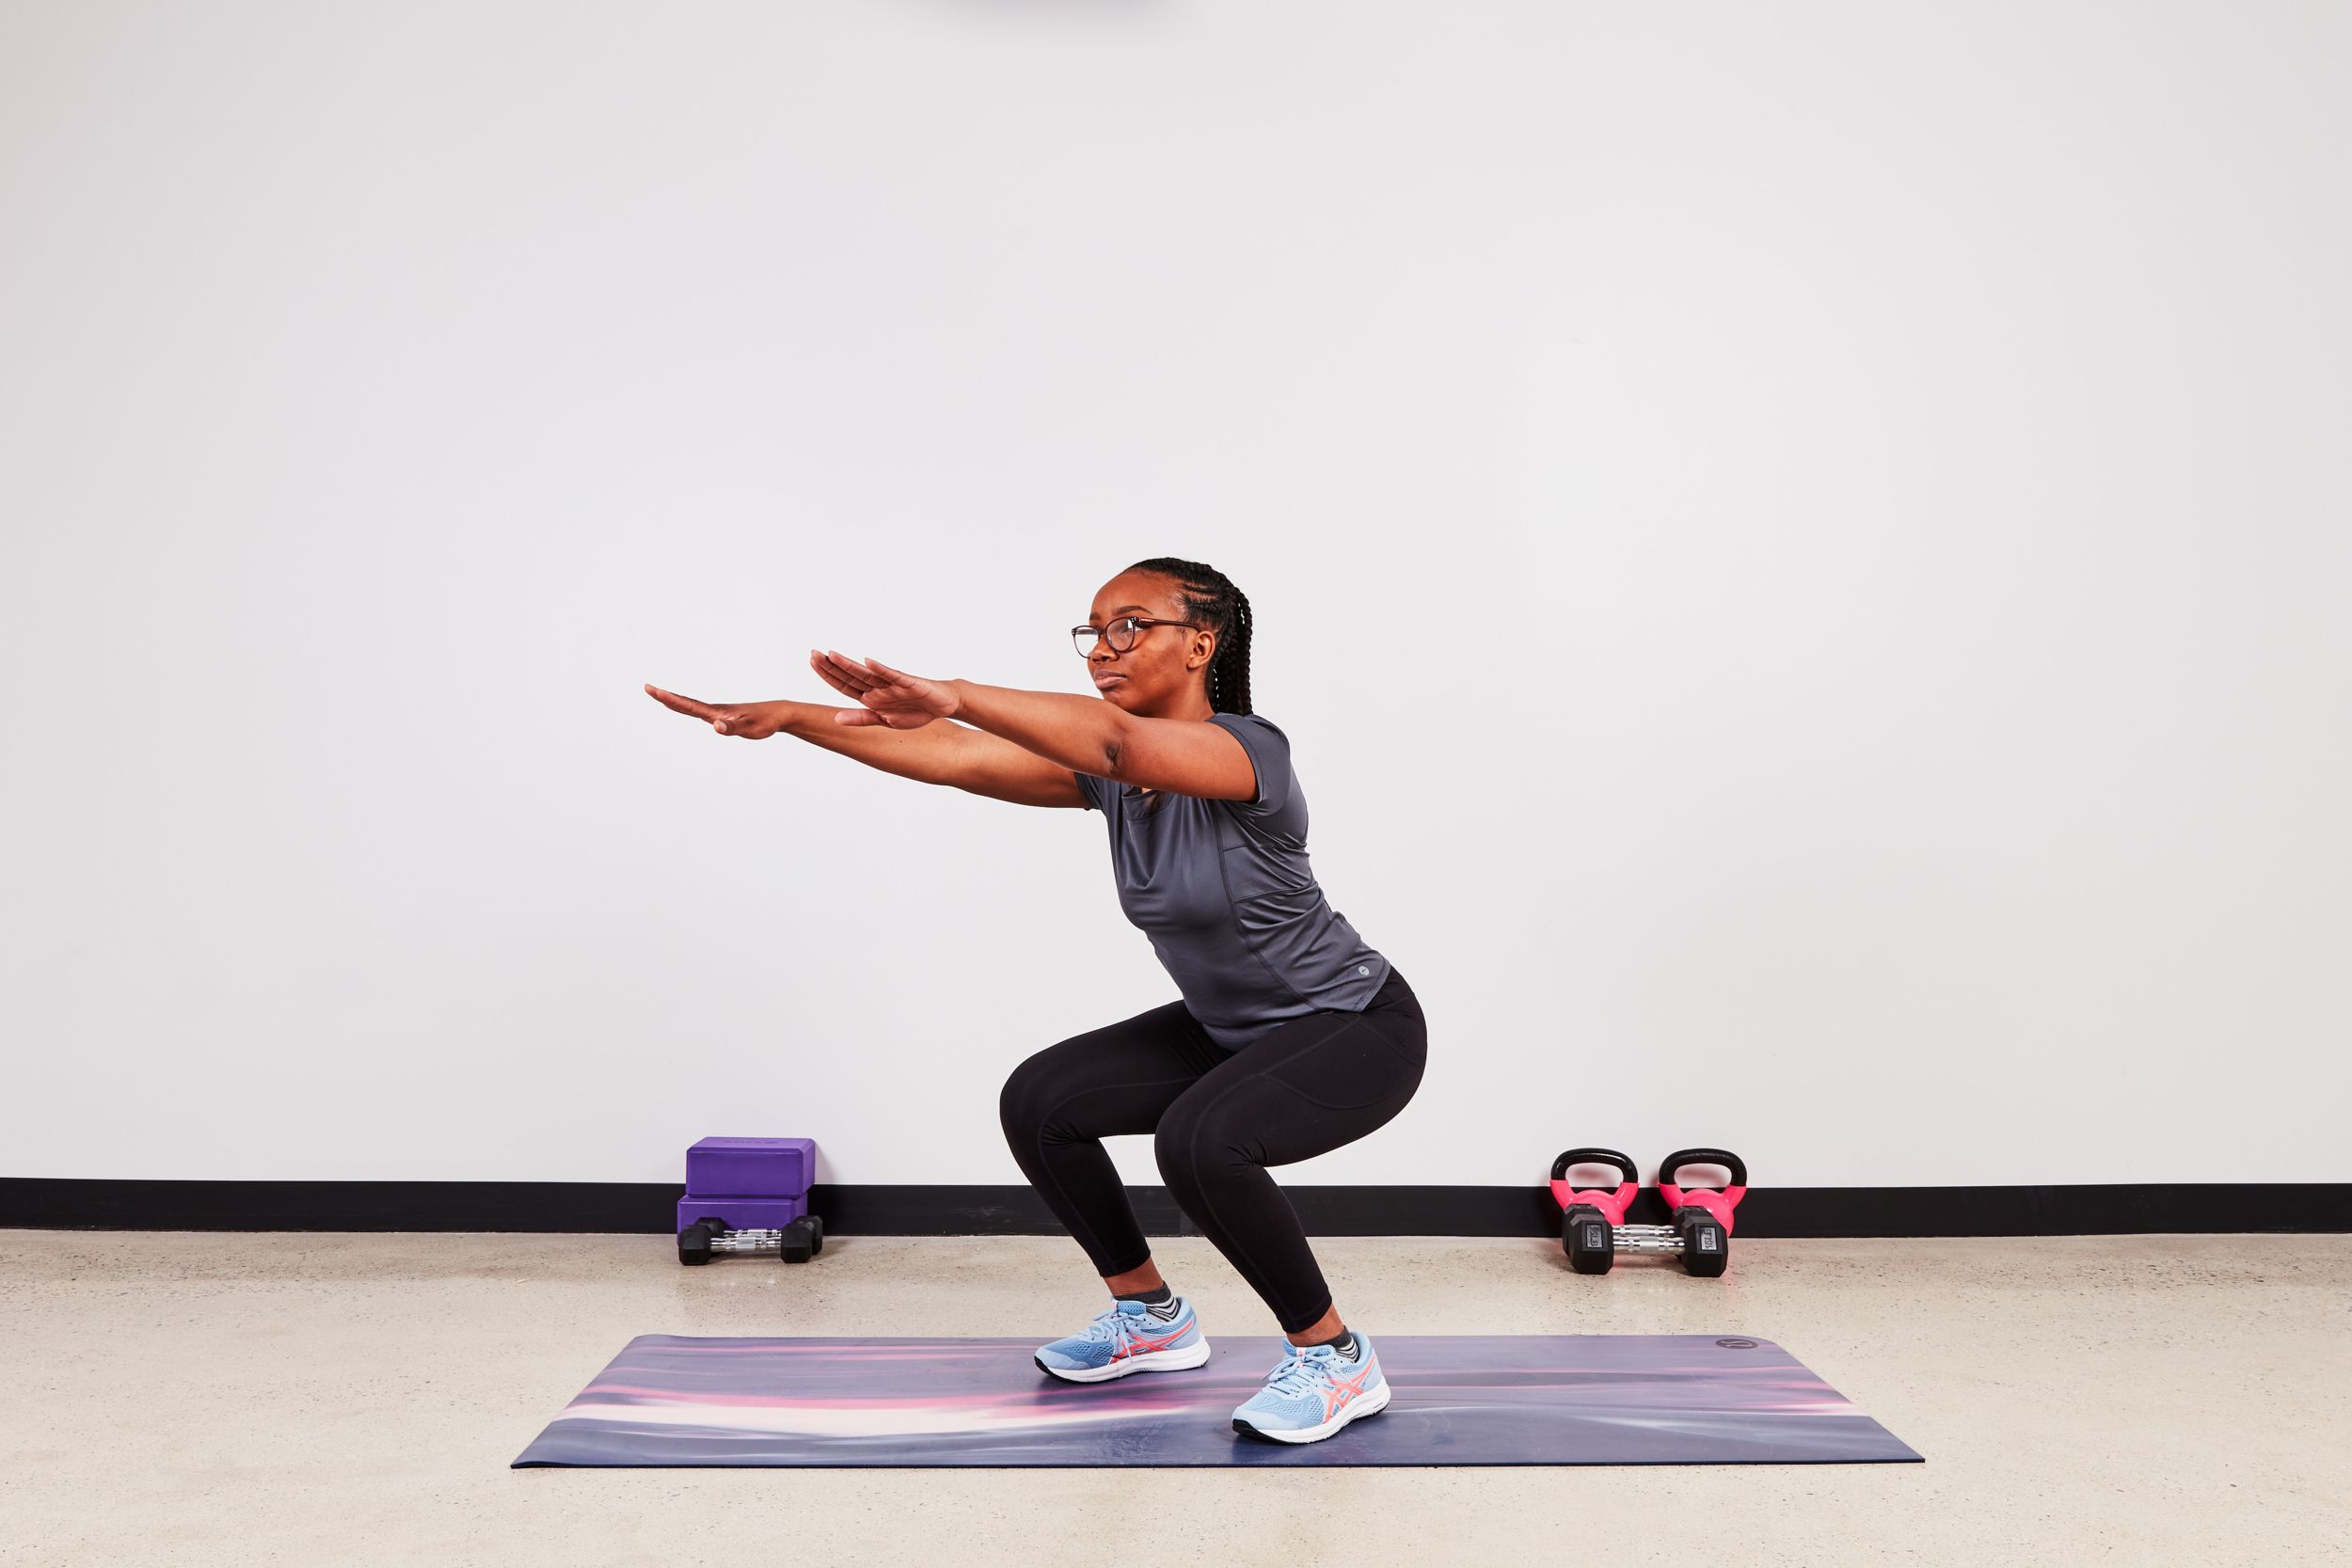 Monique Lebrun performing a squat as part of the desk exercise series